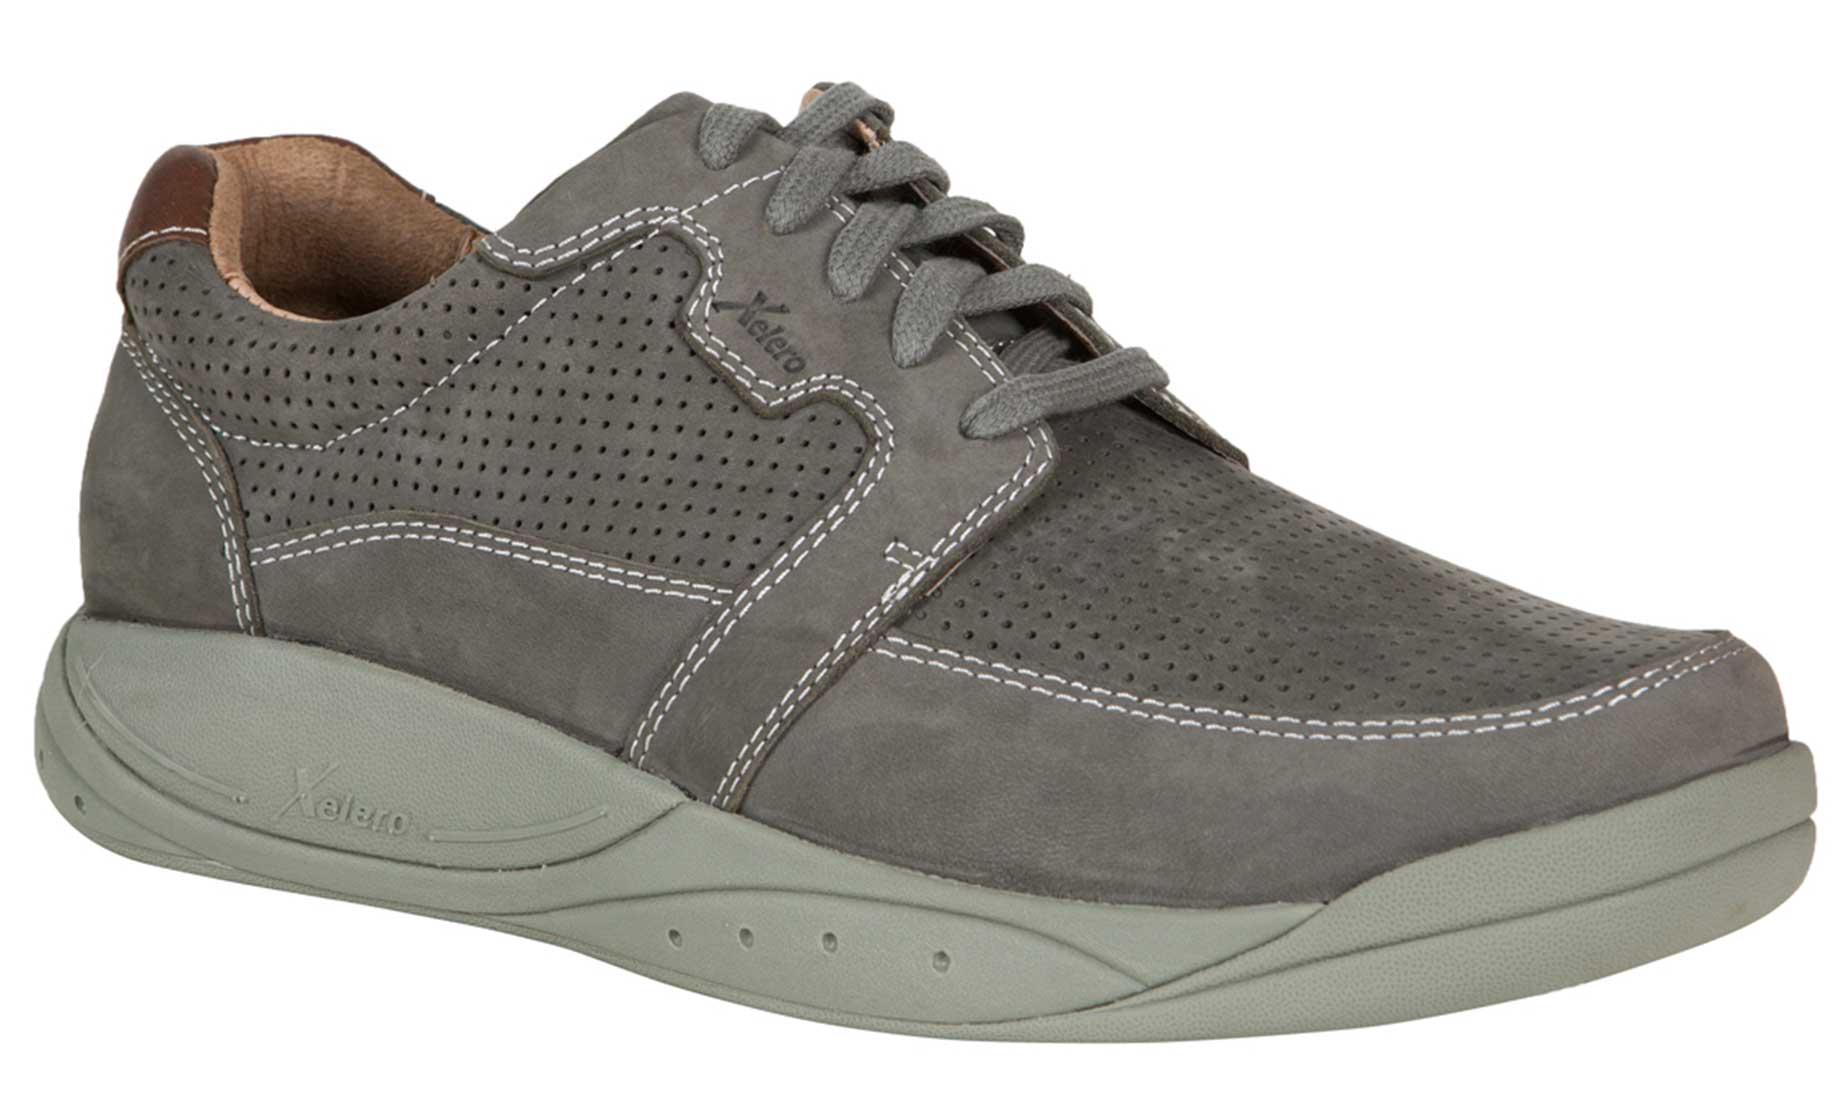 Xelero Shoes Stockholm X19608 Men's Casual Shoe - Comfort Orthopedic Diabetic Shoe - Extra Depth For Orthotics - Extra Wide